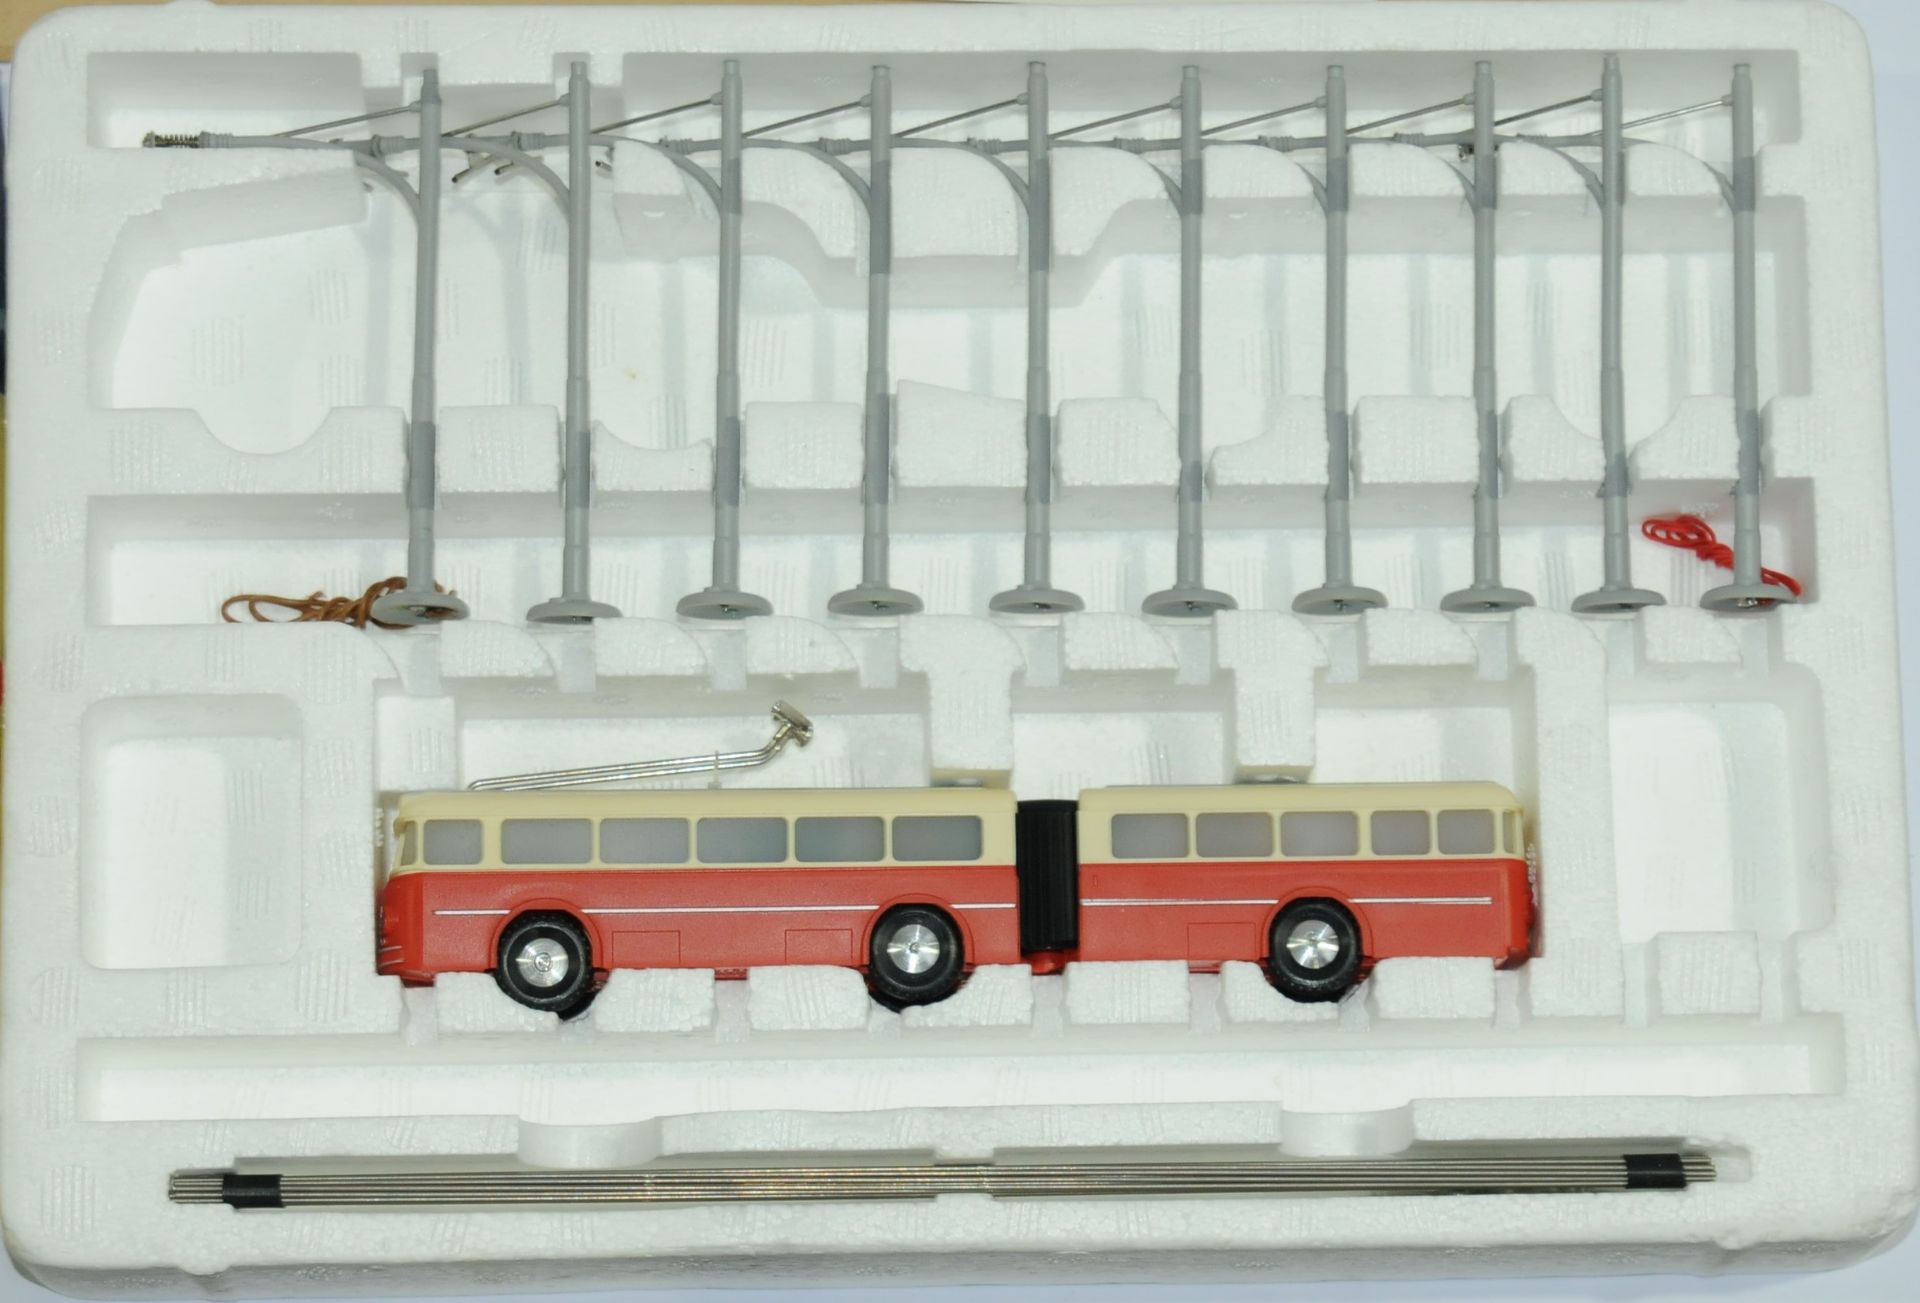 Brawa (Ehiem) HO Scale Trolleybus Set No.6103 along with 6106R Trolleybus - Bild 2 aus 4